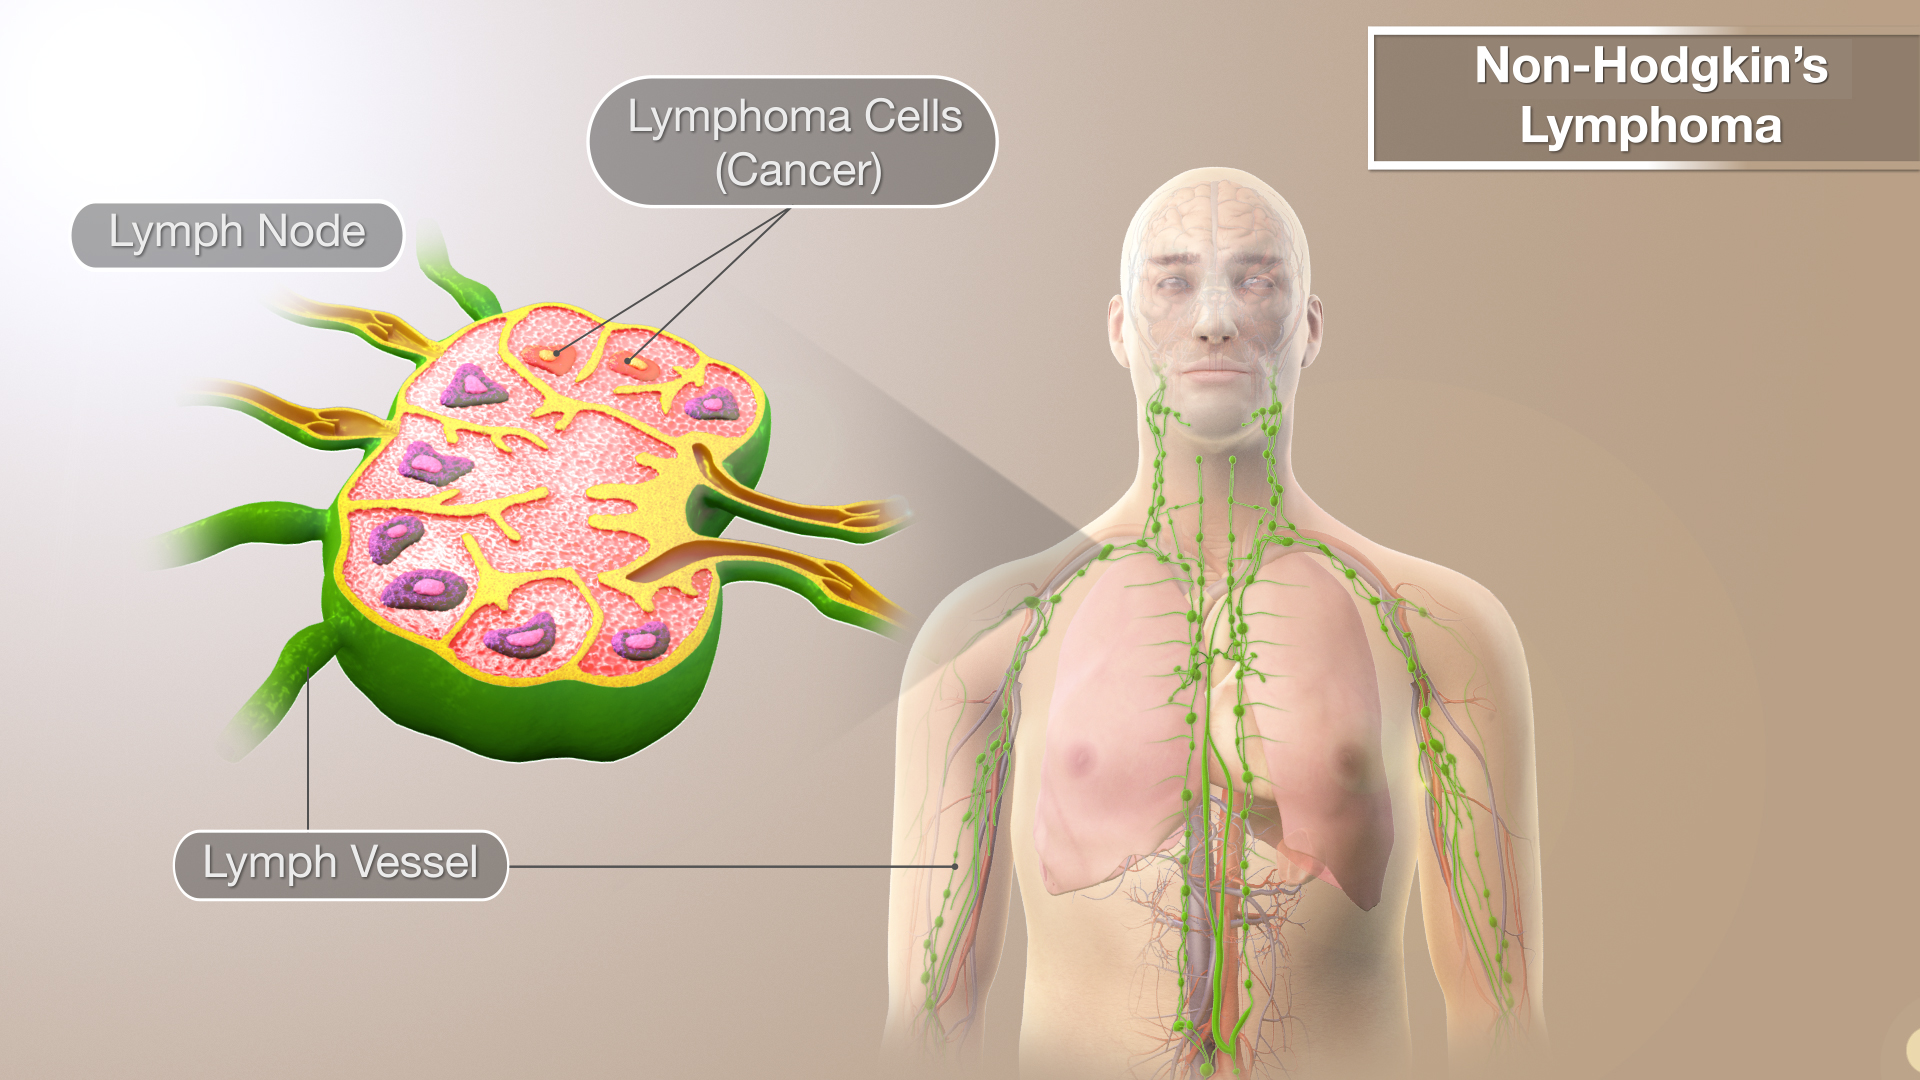 Non-Hodgkin's Lymphoma Shown & Explained Using Medical Animation